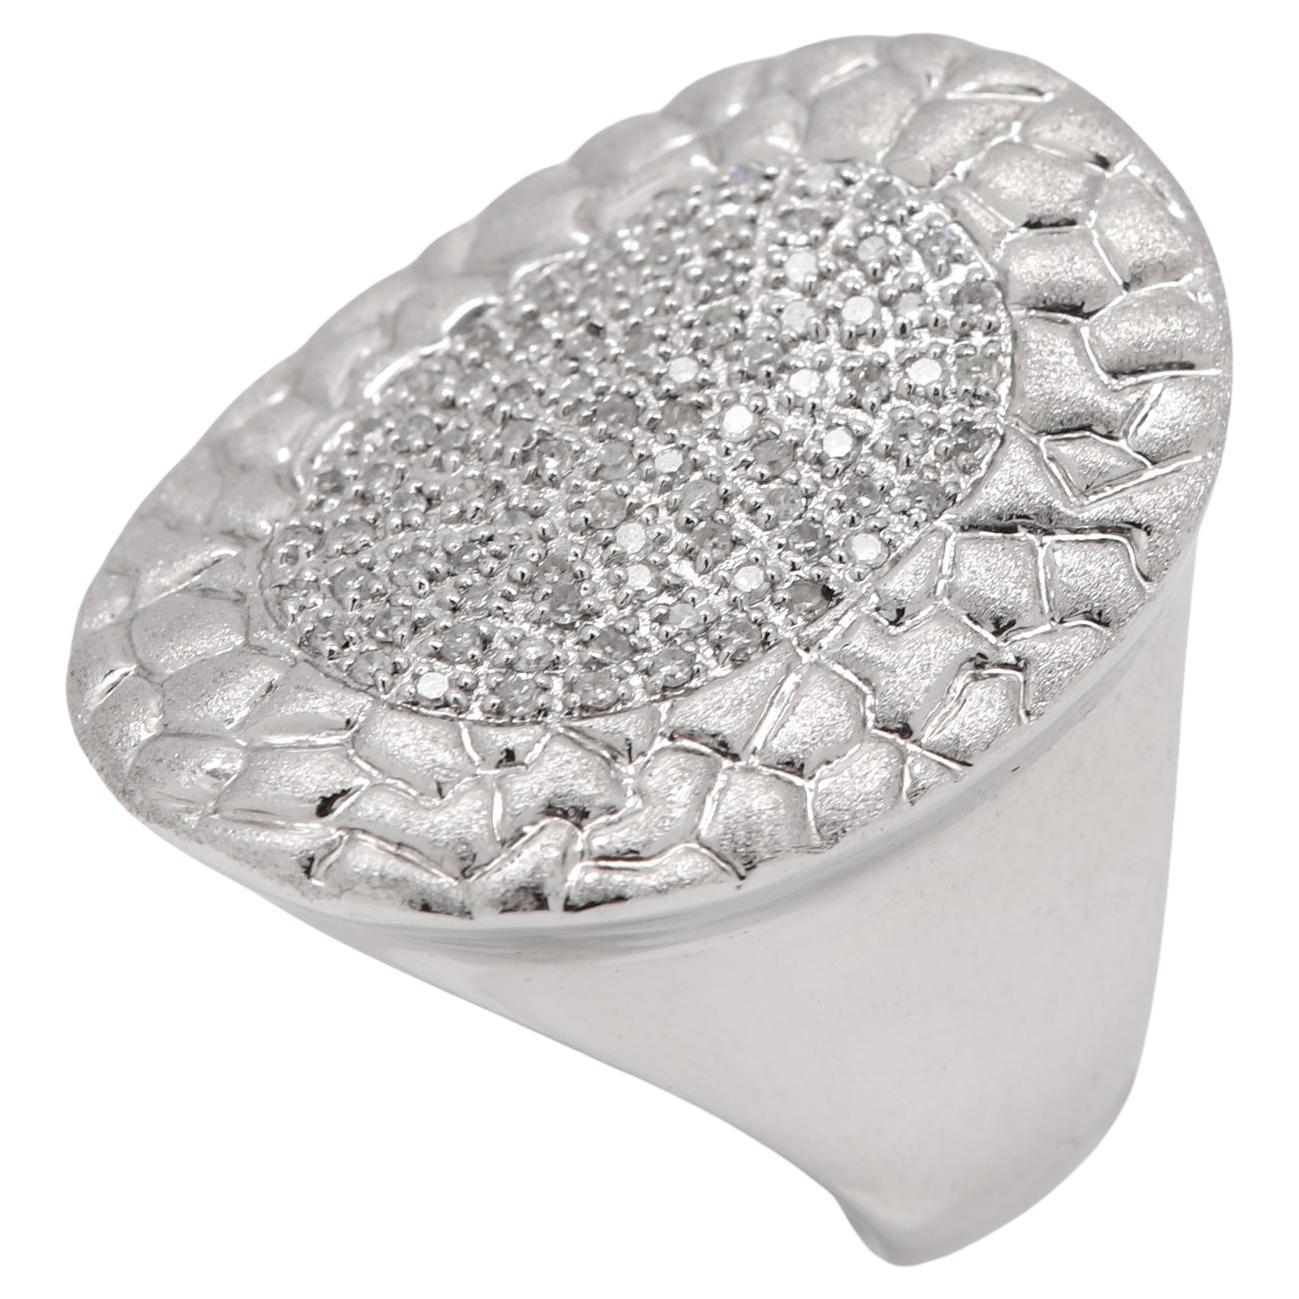 Large Cluster Diamond Ring Sterling Silver 925 Natural Diamonds Cluster Design